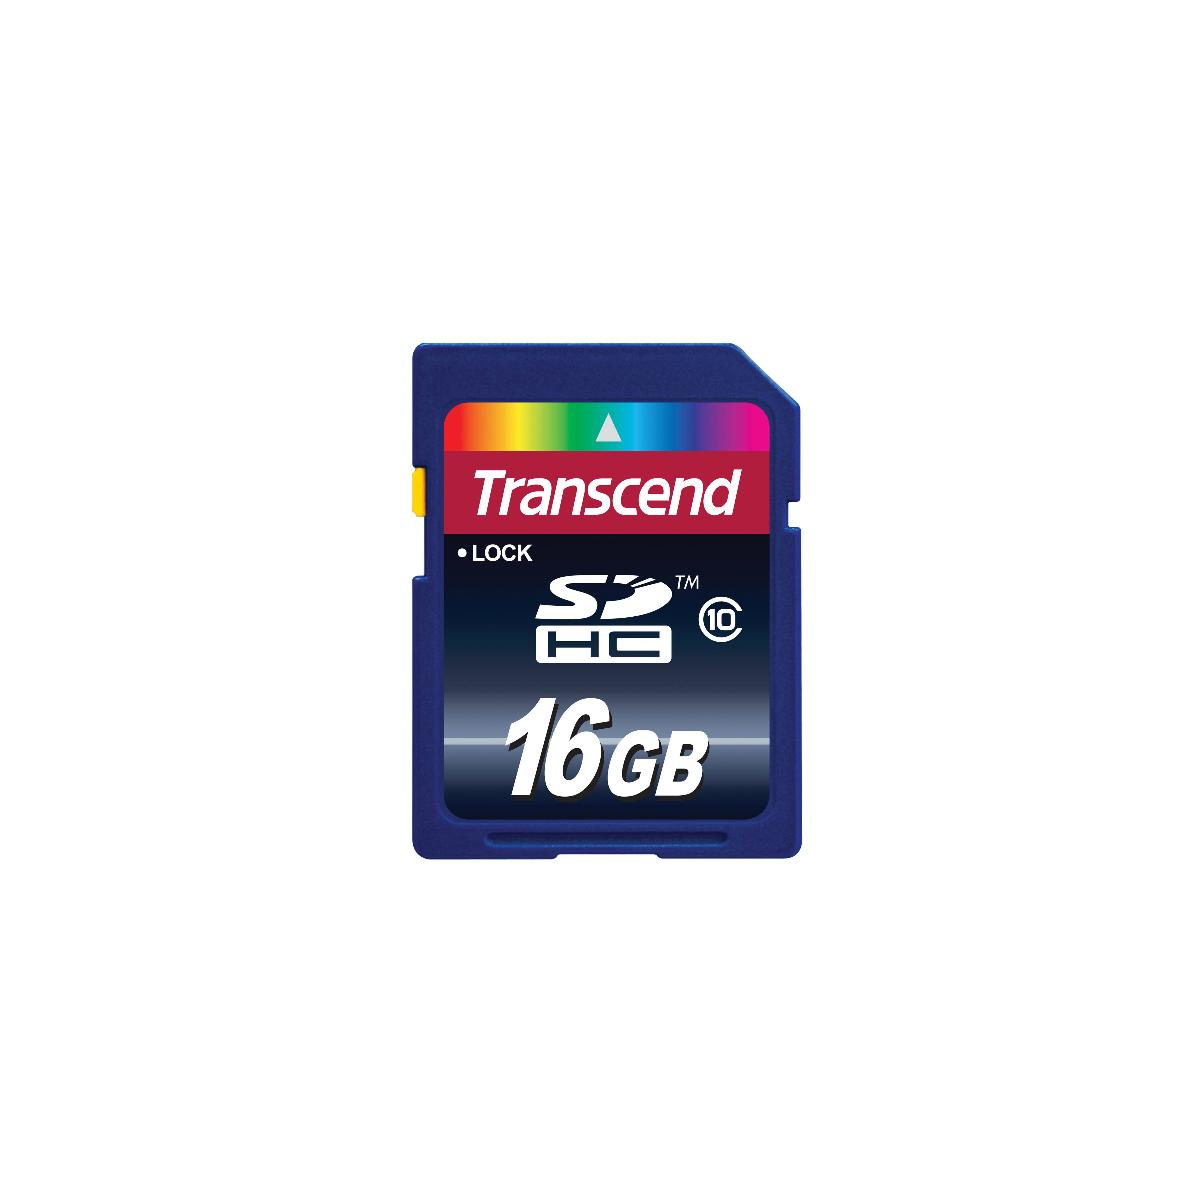 TRANSCEND TS16GSDHC10, SDHC Speicherkarte, 16 GB, MB/s 20